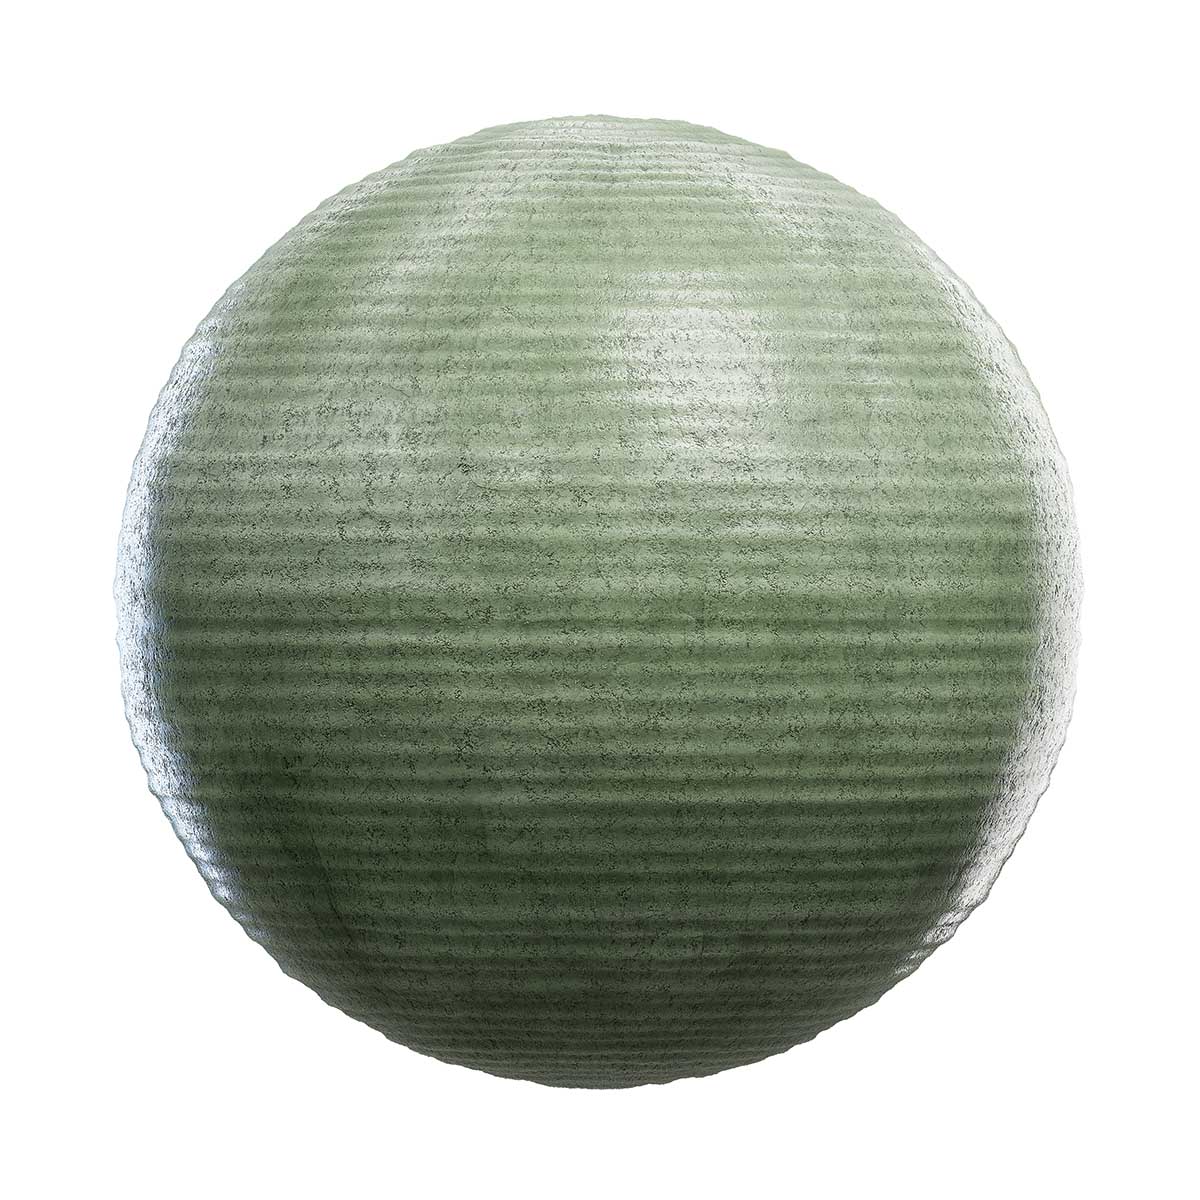 Green Clay Pot PBR Texture